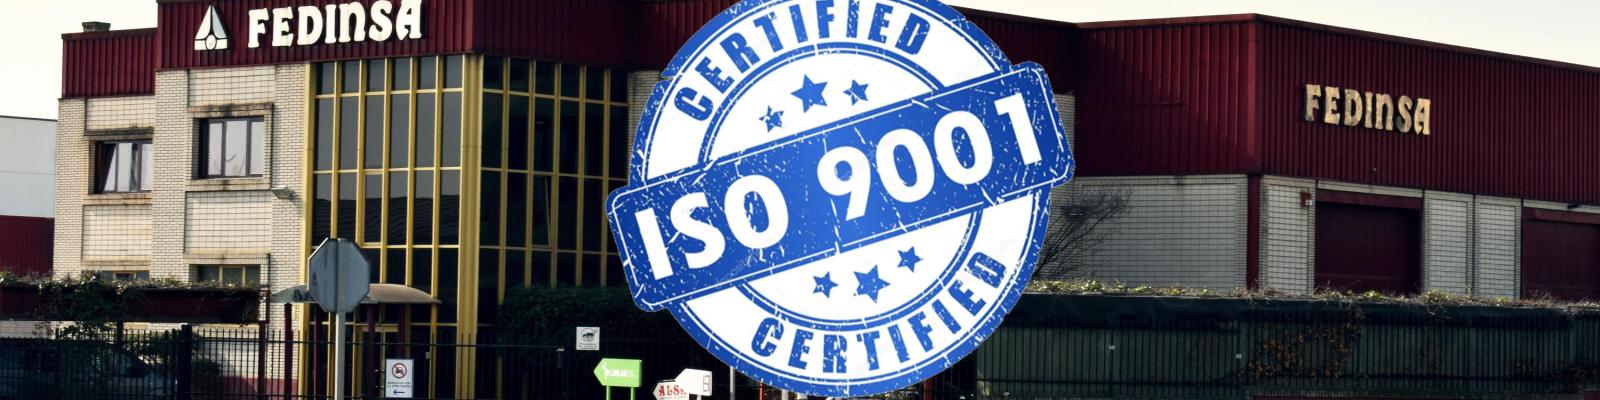 Fedinsa re-aprueba el certificado ISO-9001